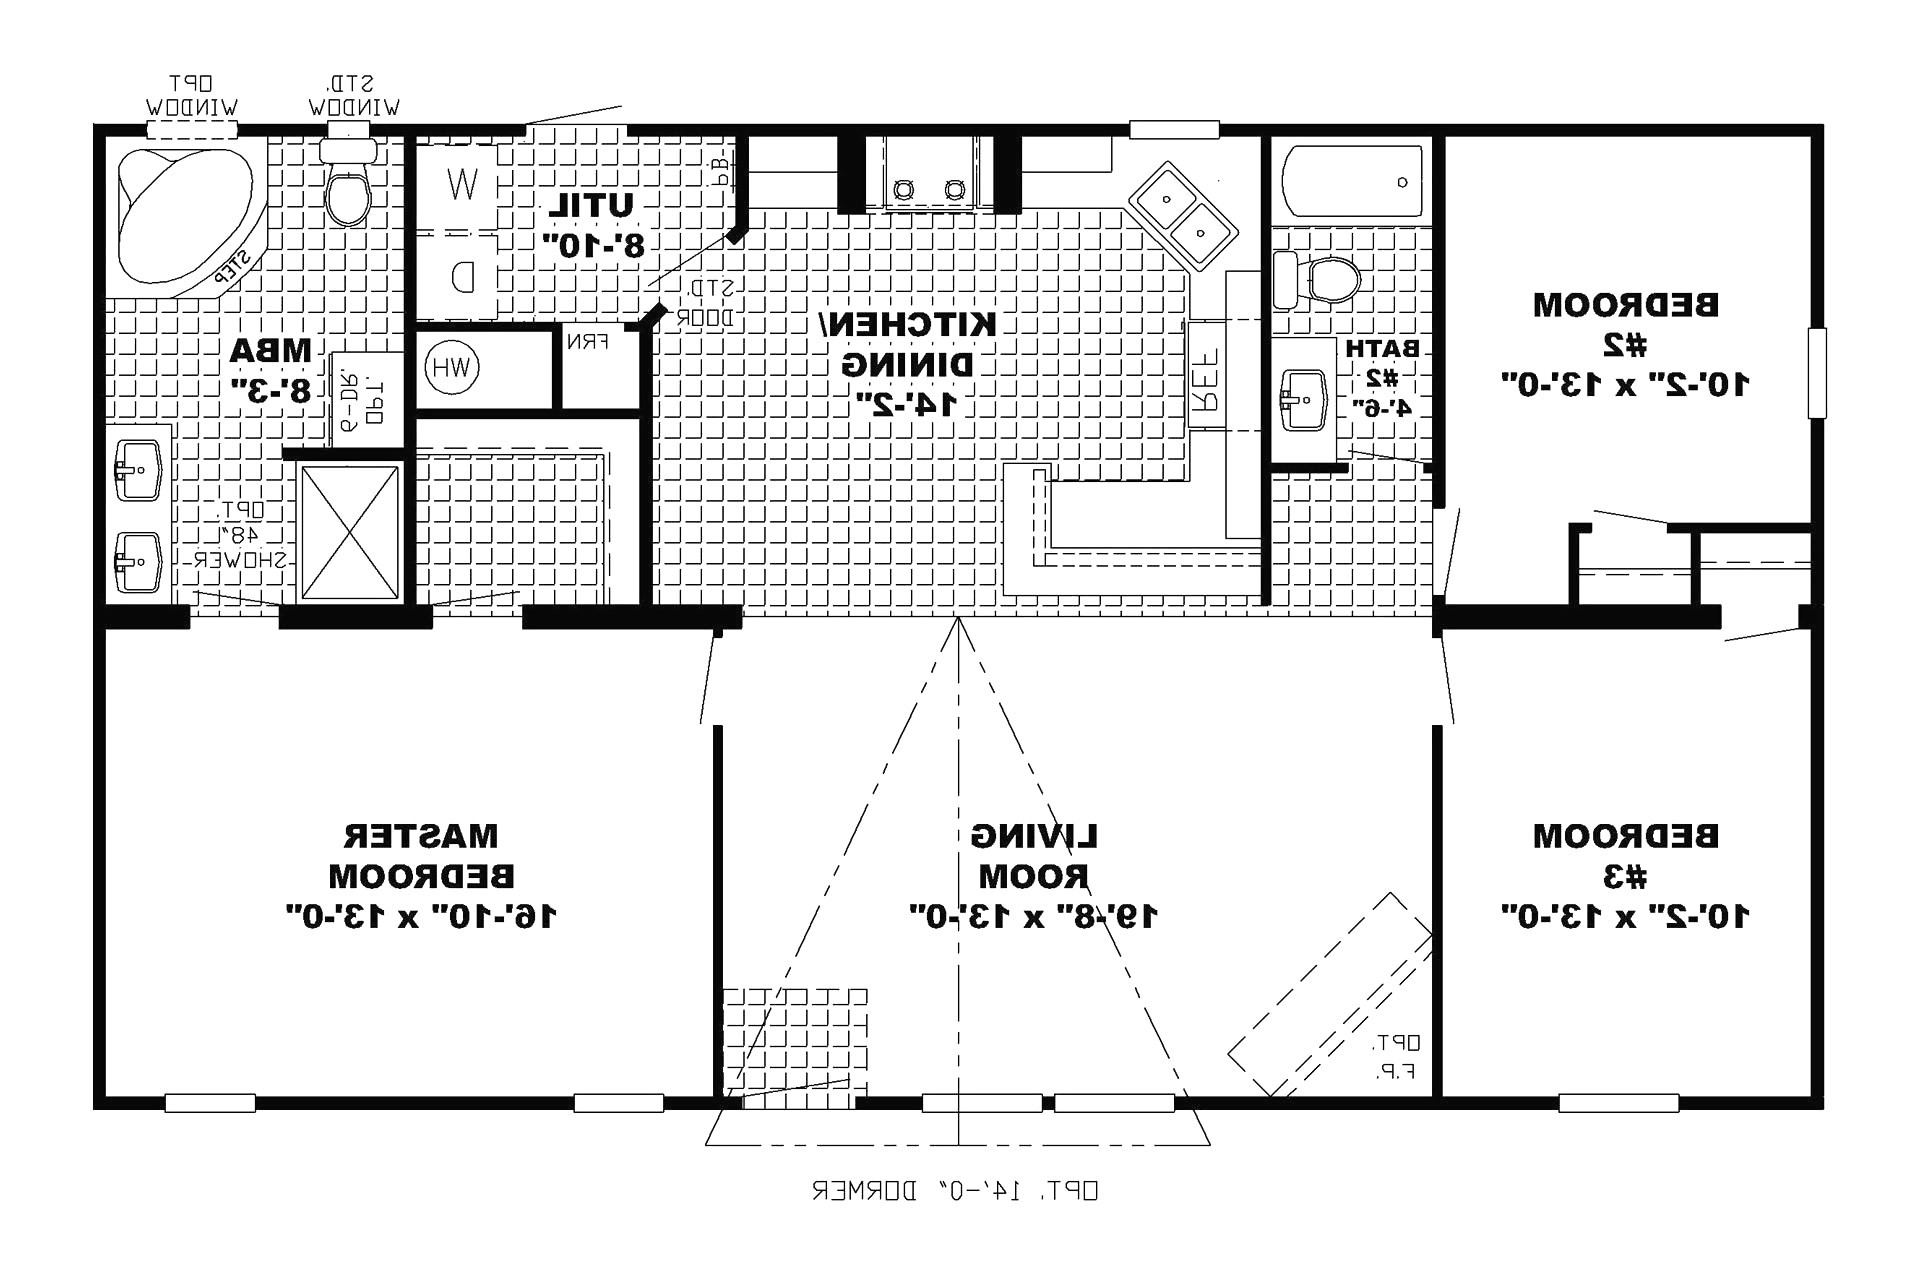 a 3bedroom simple floor plan